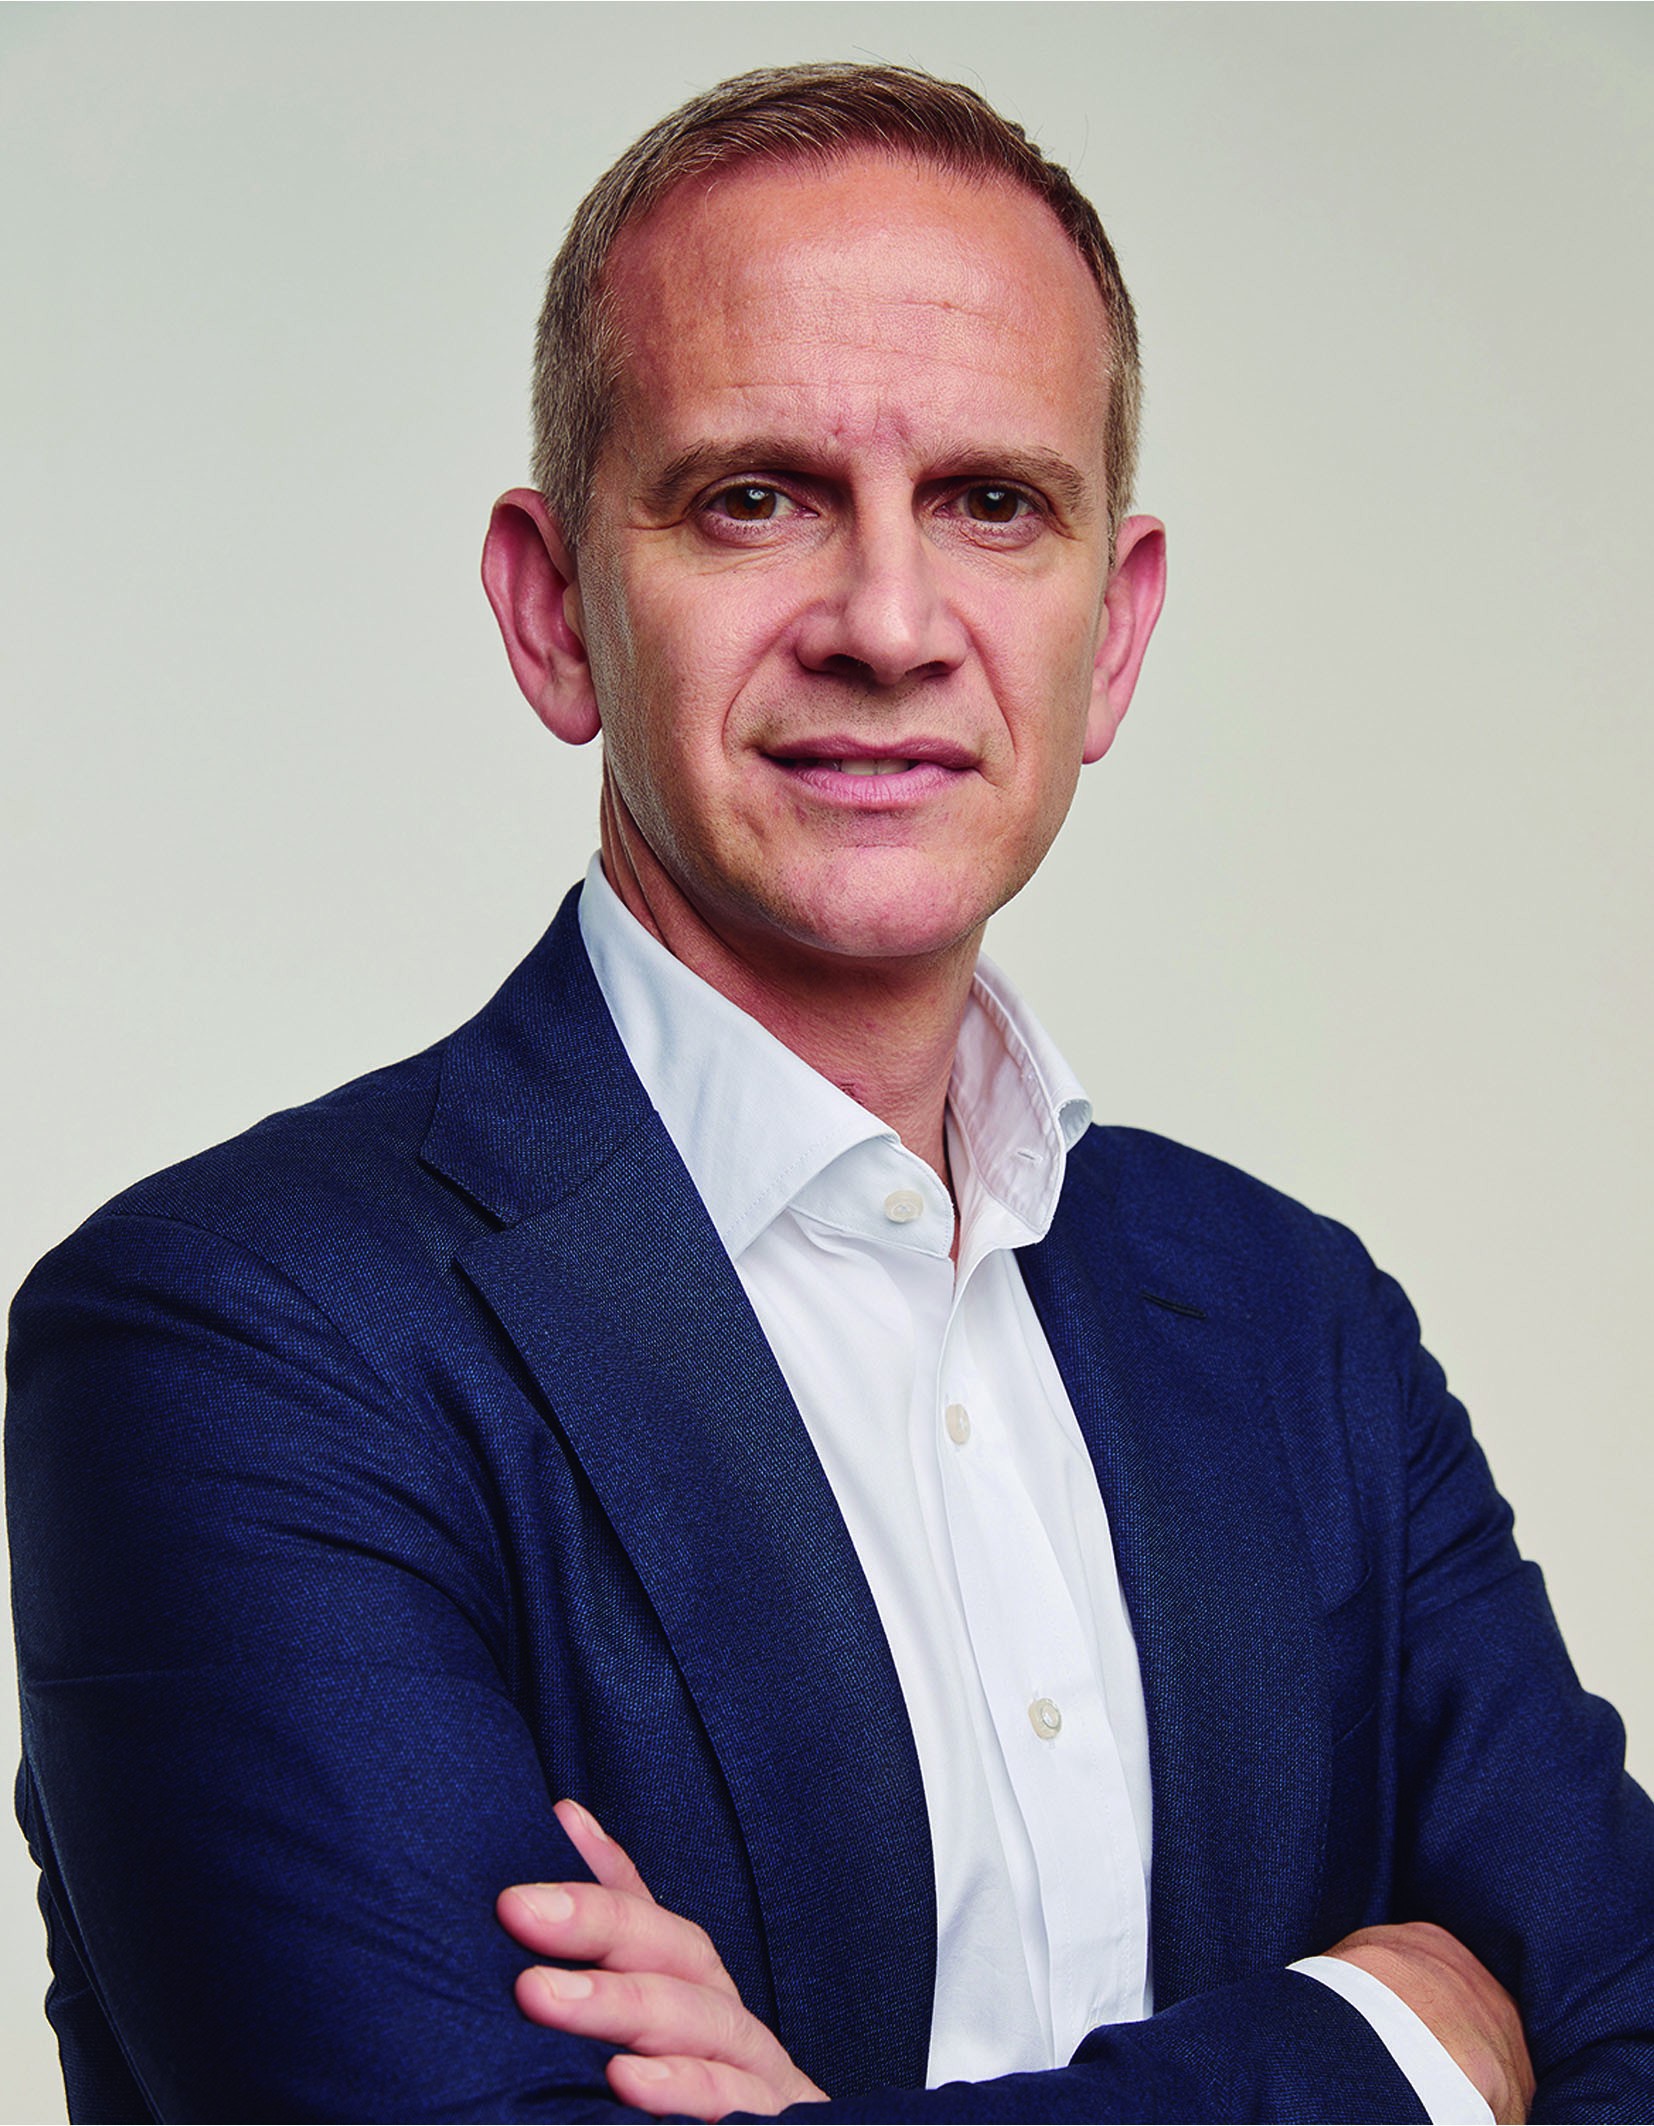 Inditex Executive Chairman Pablo Isla proposes Carlos Crespo  as the Group's CEO